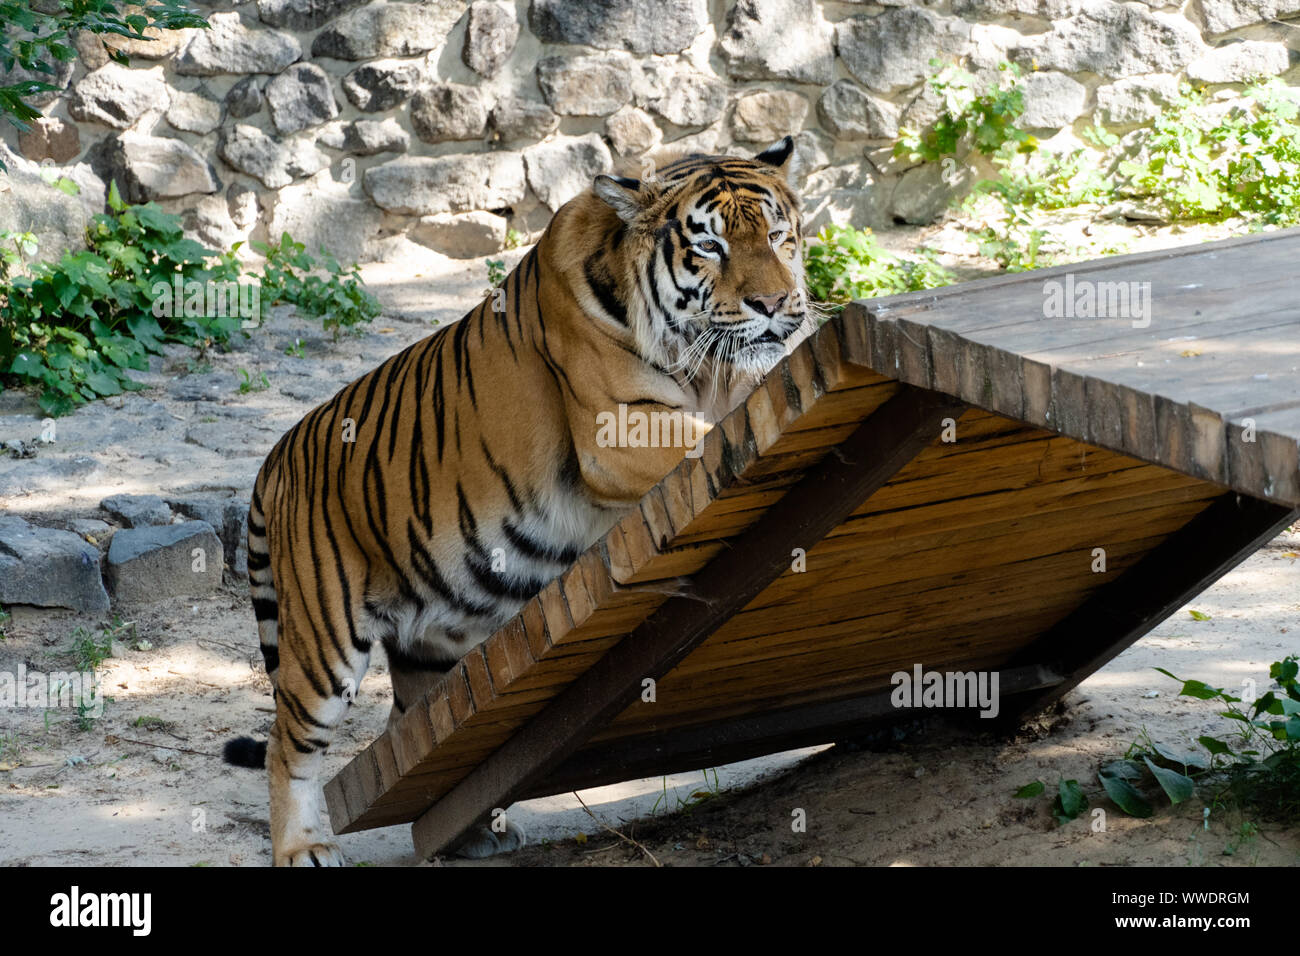 Panthera tigris altaica, also known as the Amur tiger. Stock Photo